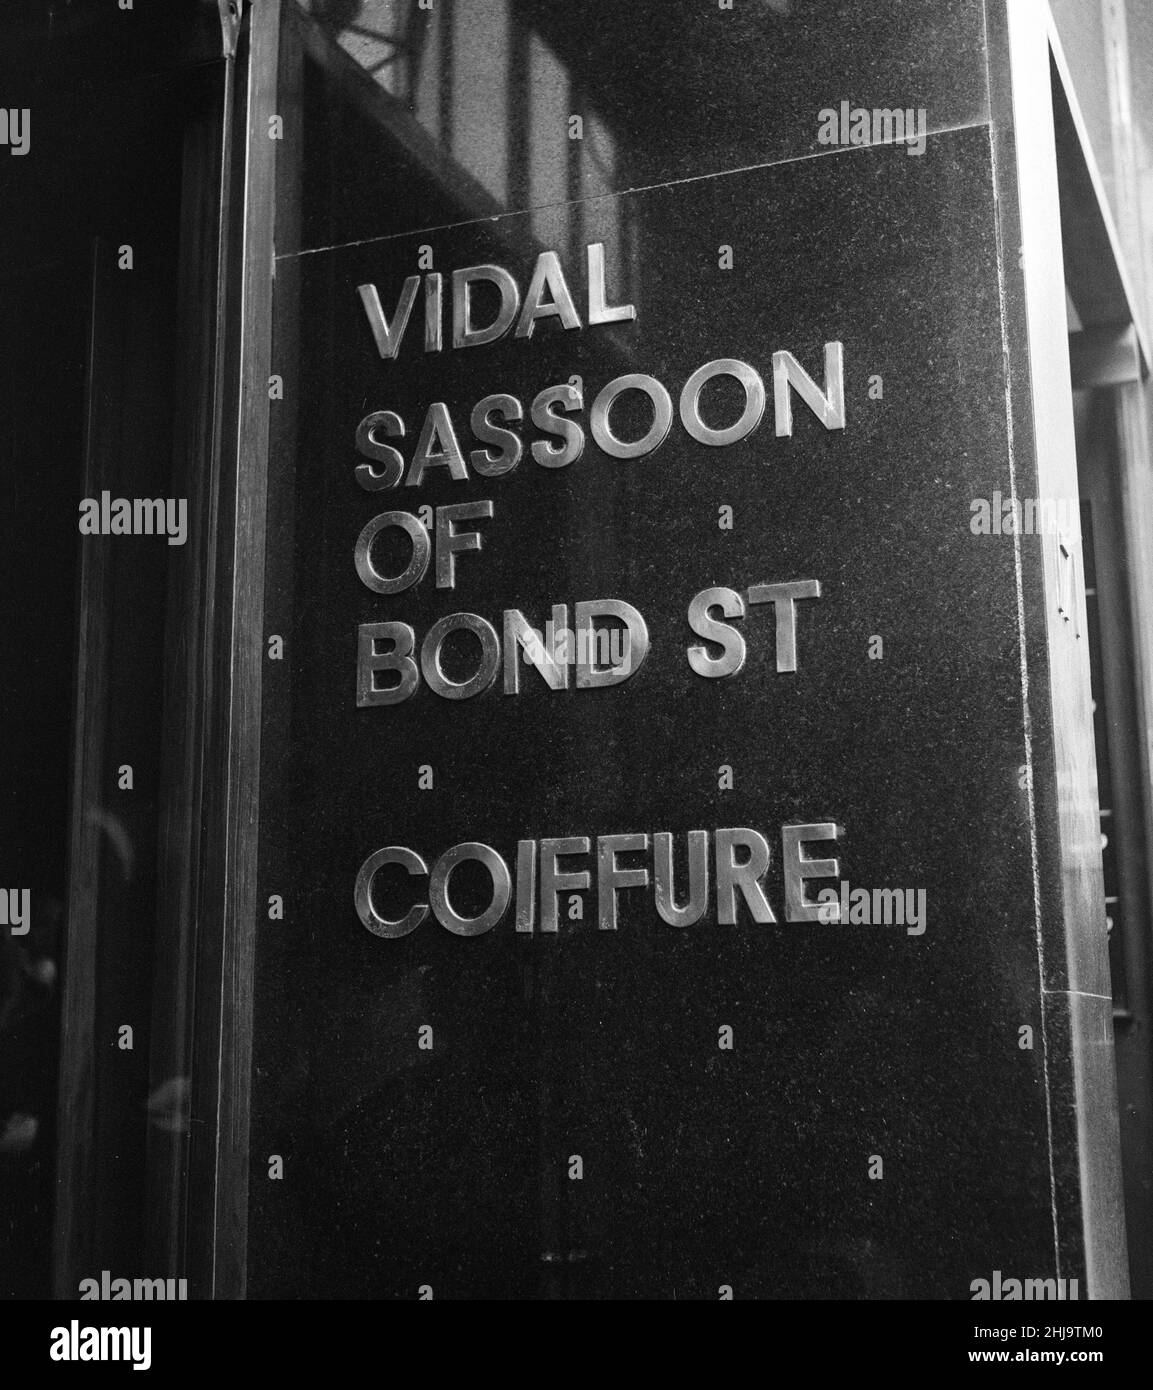 Vidal Sassoon Salon, Bond Street, London, Dienstag, 13th. August 1963. Vidal Sassoon of Bond St, Coiffure Stockfoto